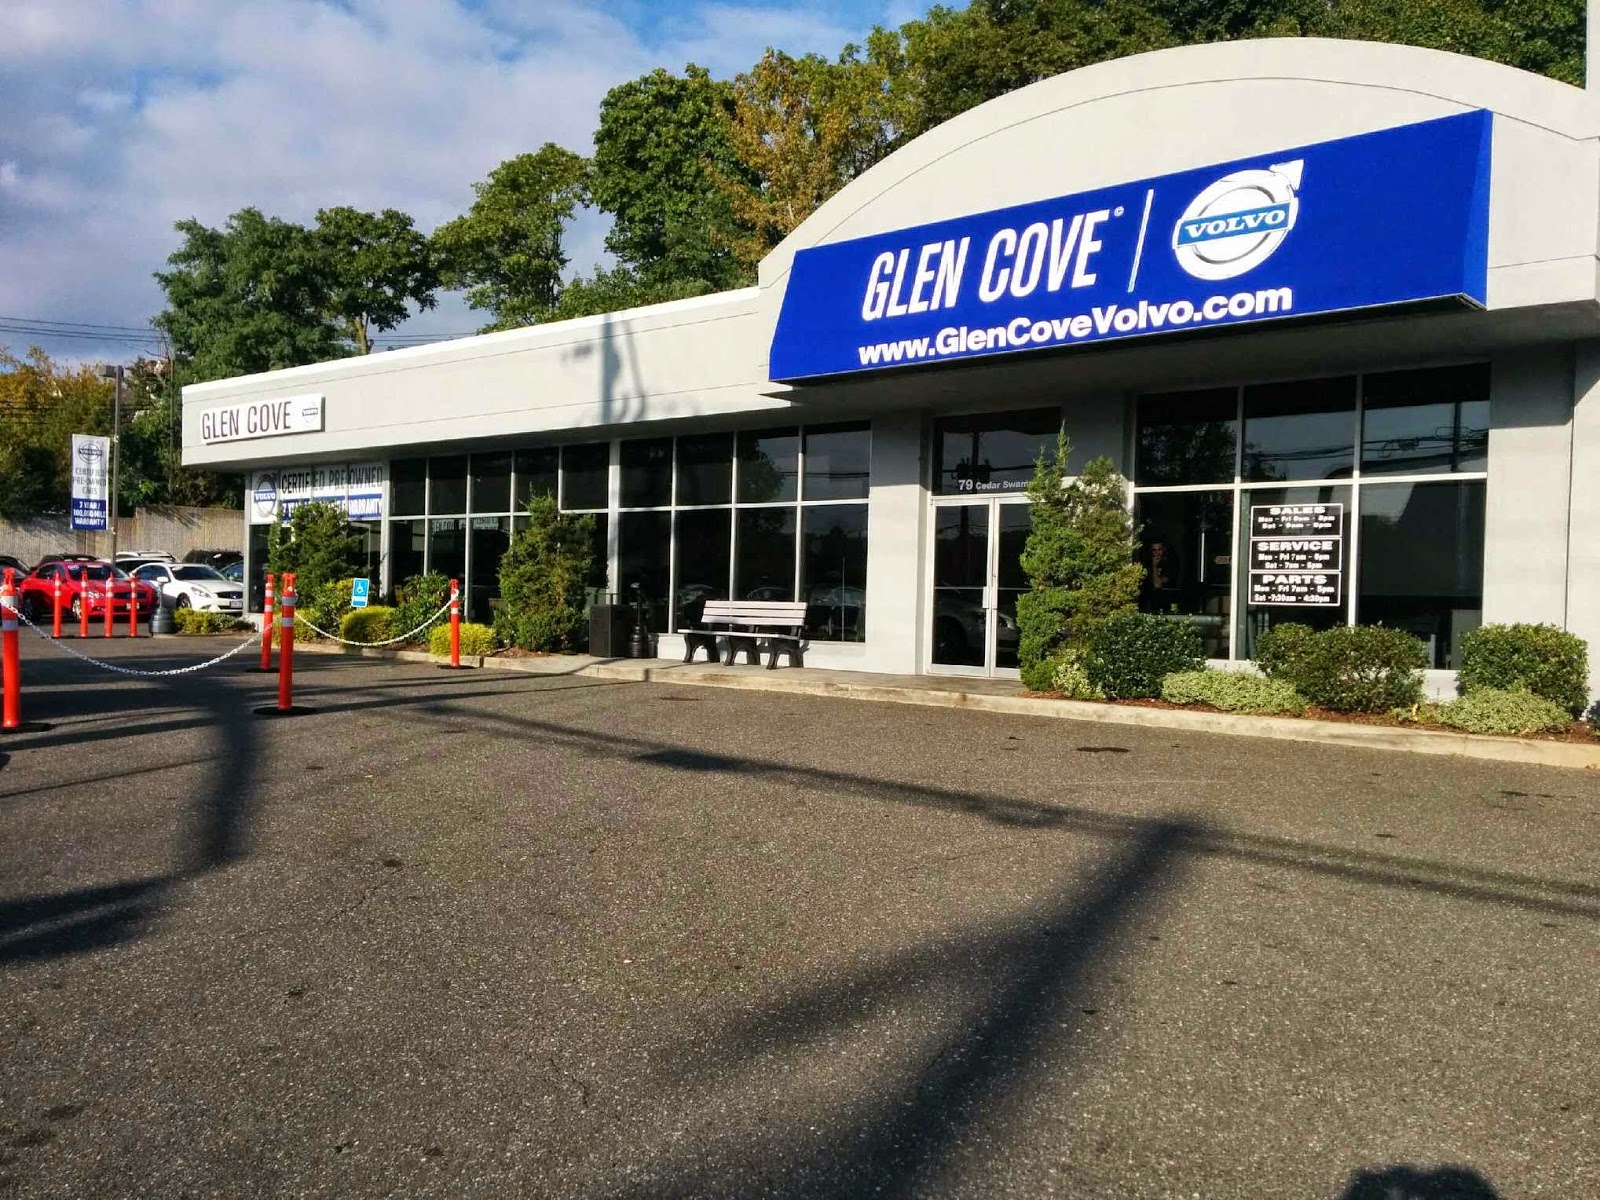 Photo of Glen Cove Volvo in Glen Cove City, New York, United States - 1 Picture of Point of interest, Establishment, Car dealer, Store